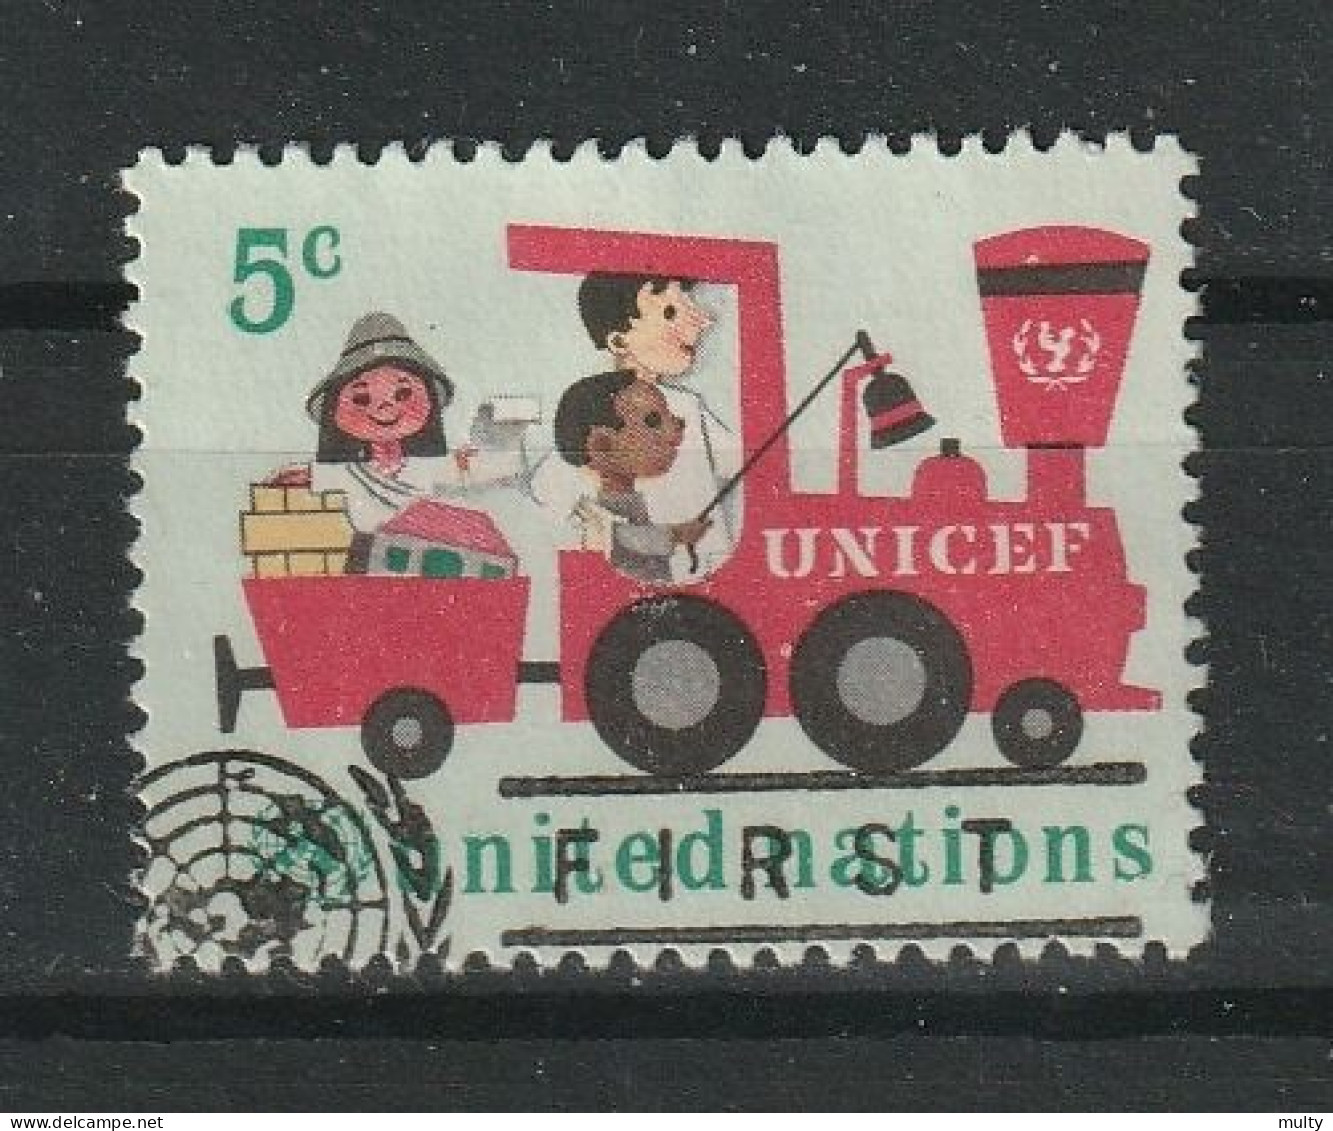 Verenigde Naties New York Y/T 157 (0) - Used Stamps